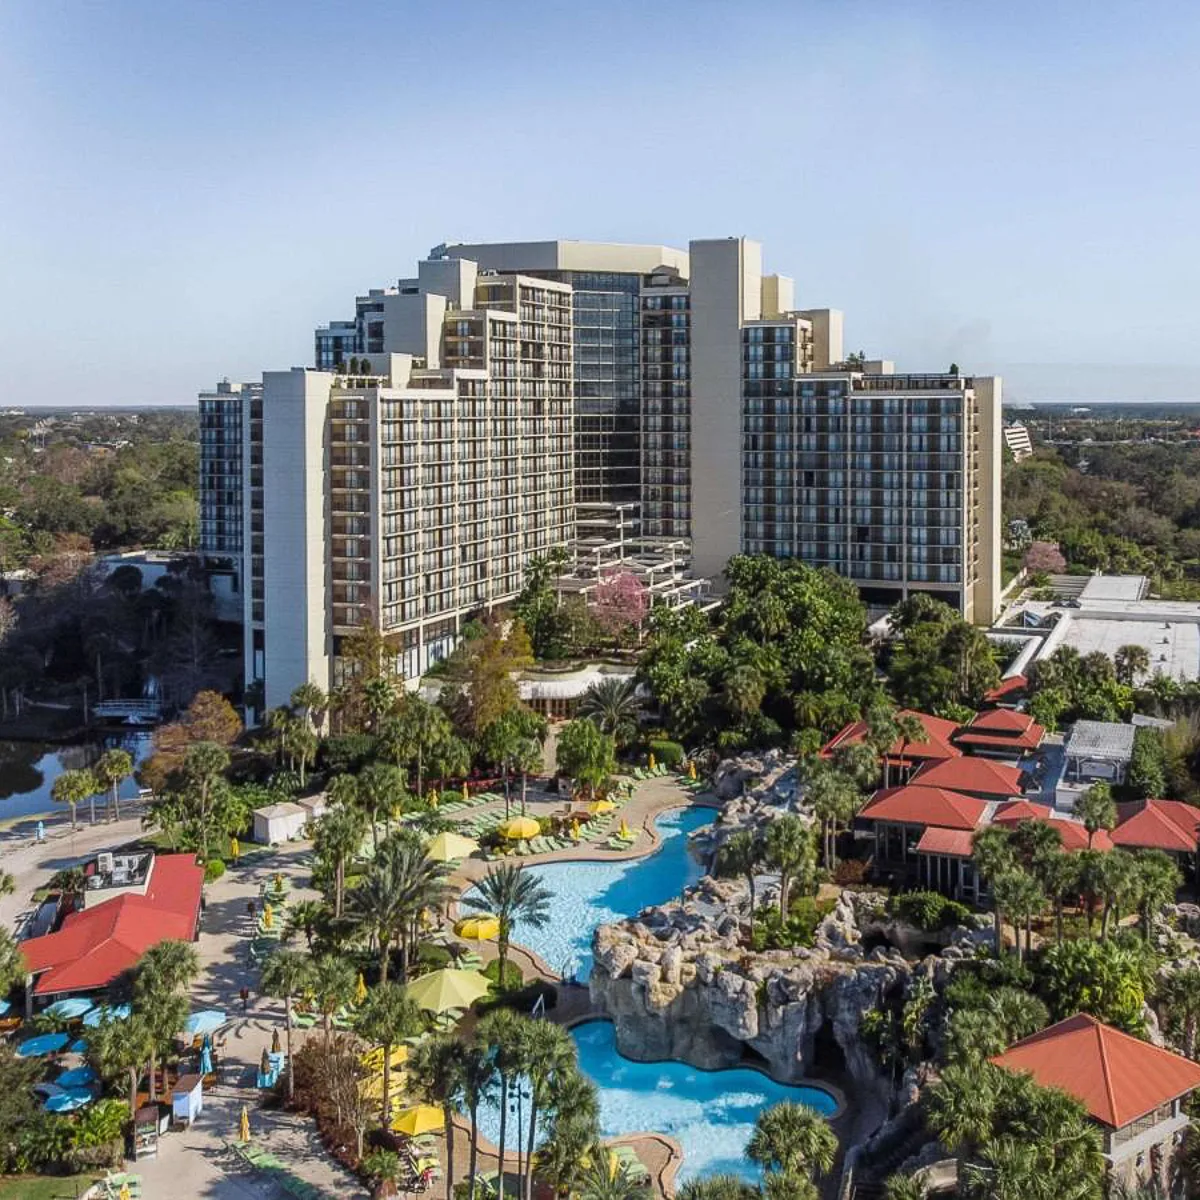 Best Hotels Near Disney World Orlando